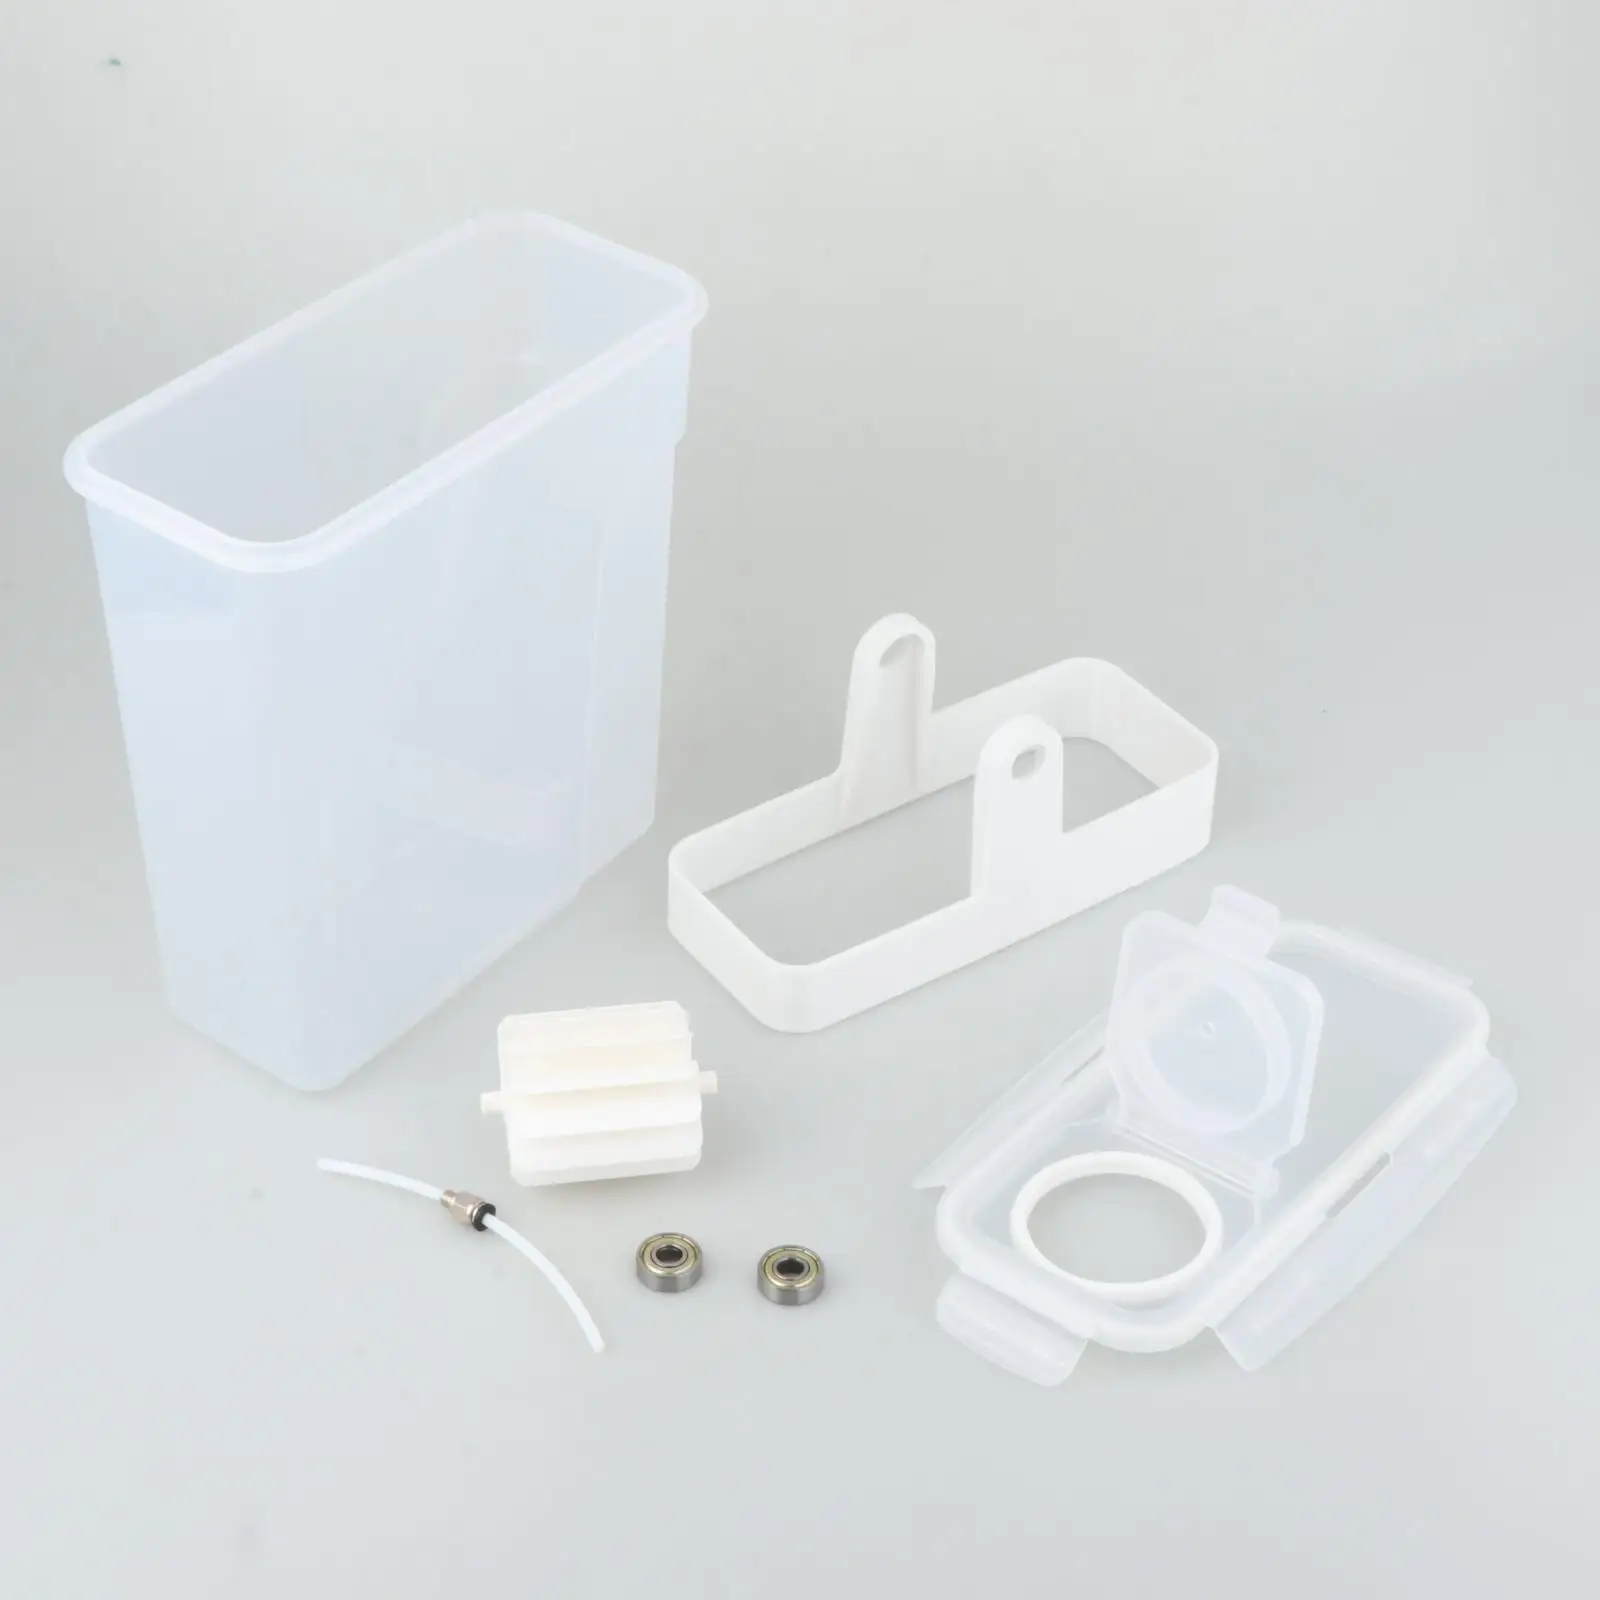 3D Printer Filament Dryer Box Keeping Filament Dry Waterproof Grain Storage Box for 1kg Filament and Pla Filament Kitchen